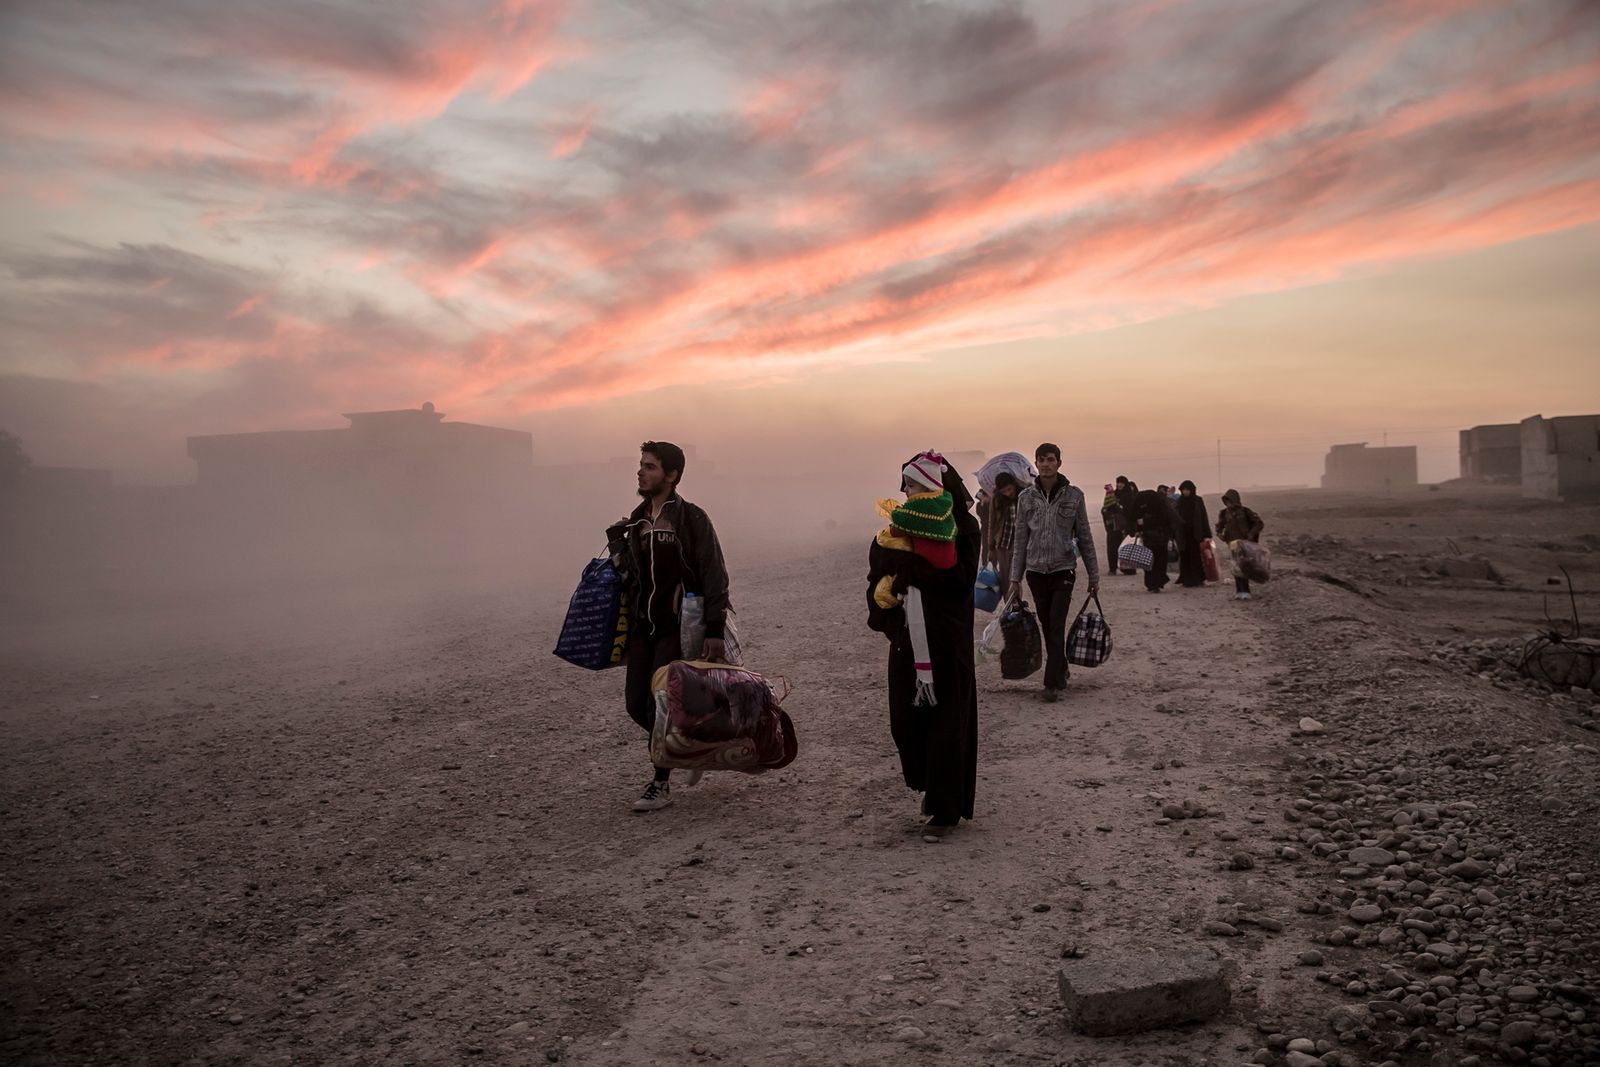 © Alvaro Canovas, from the series, Battle for Mosul